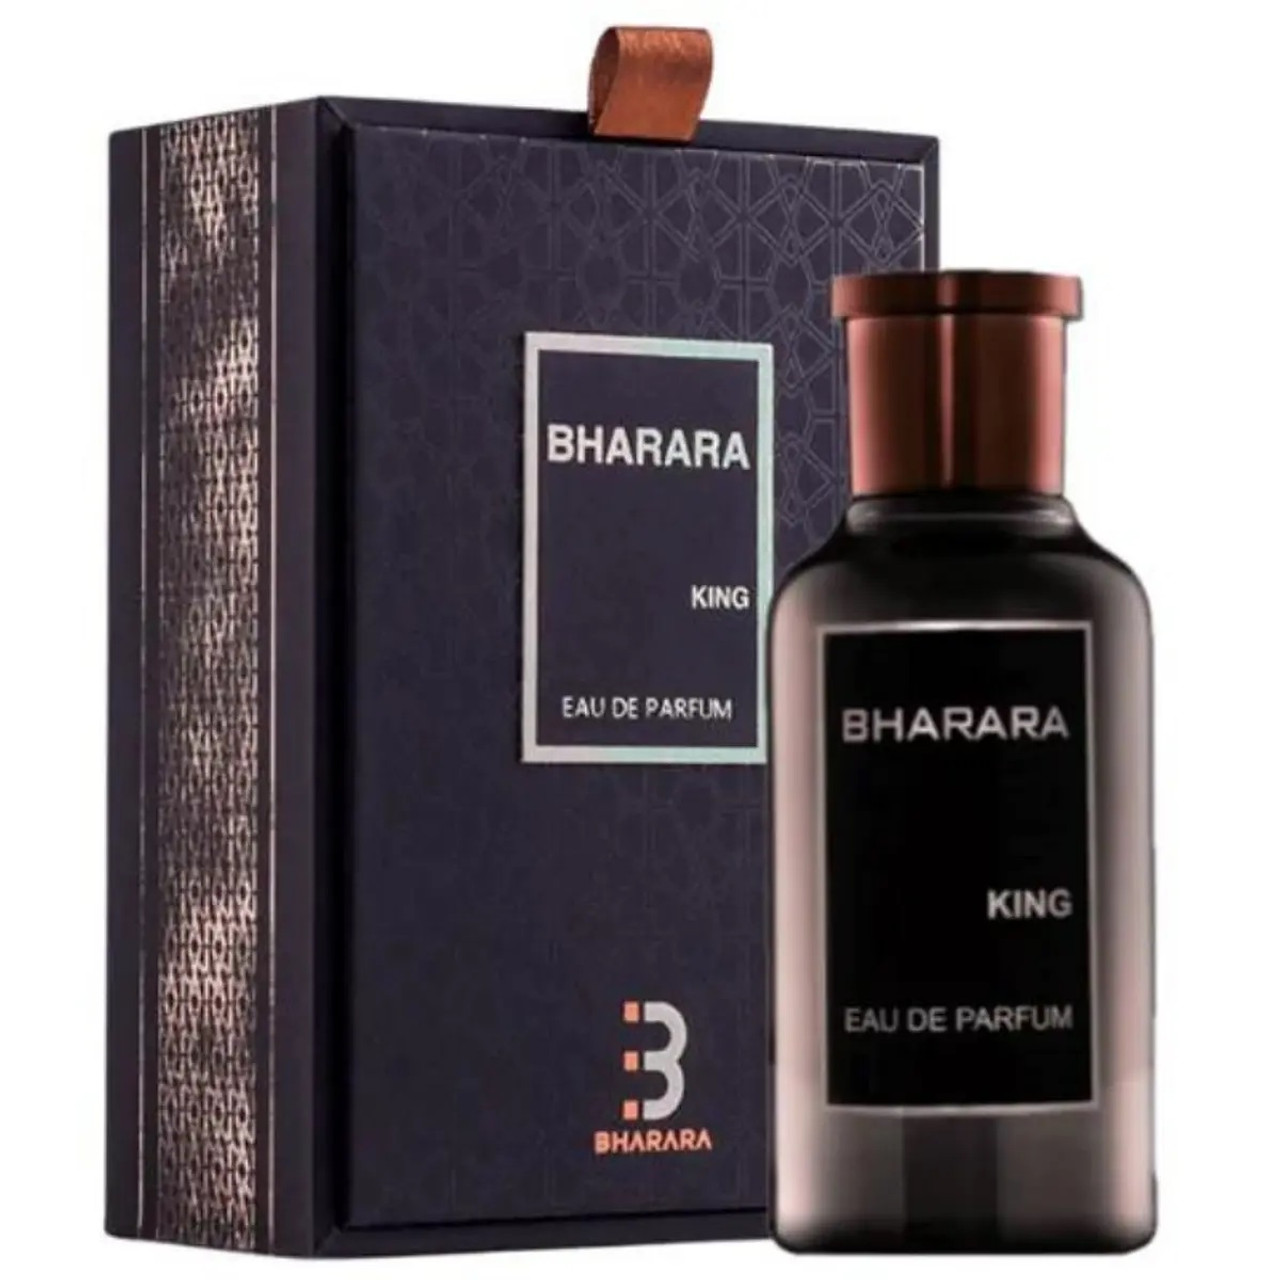 Bharara Beauty - House of Niche Fragrance Brands